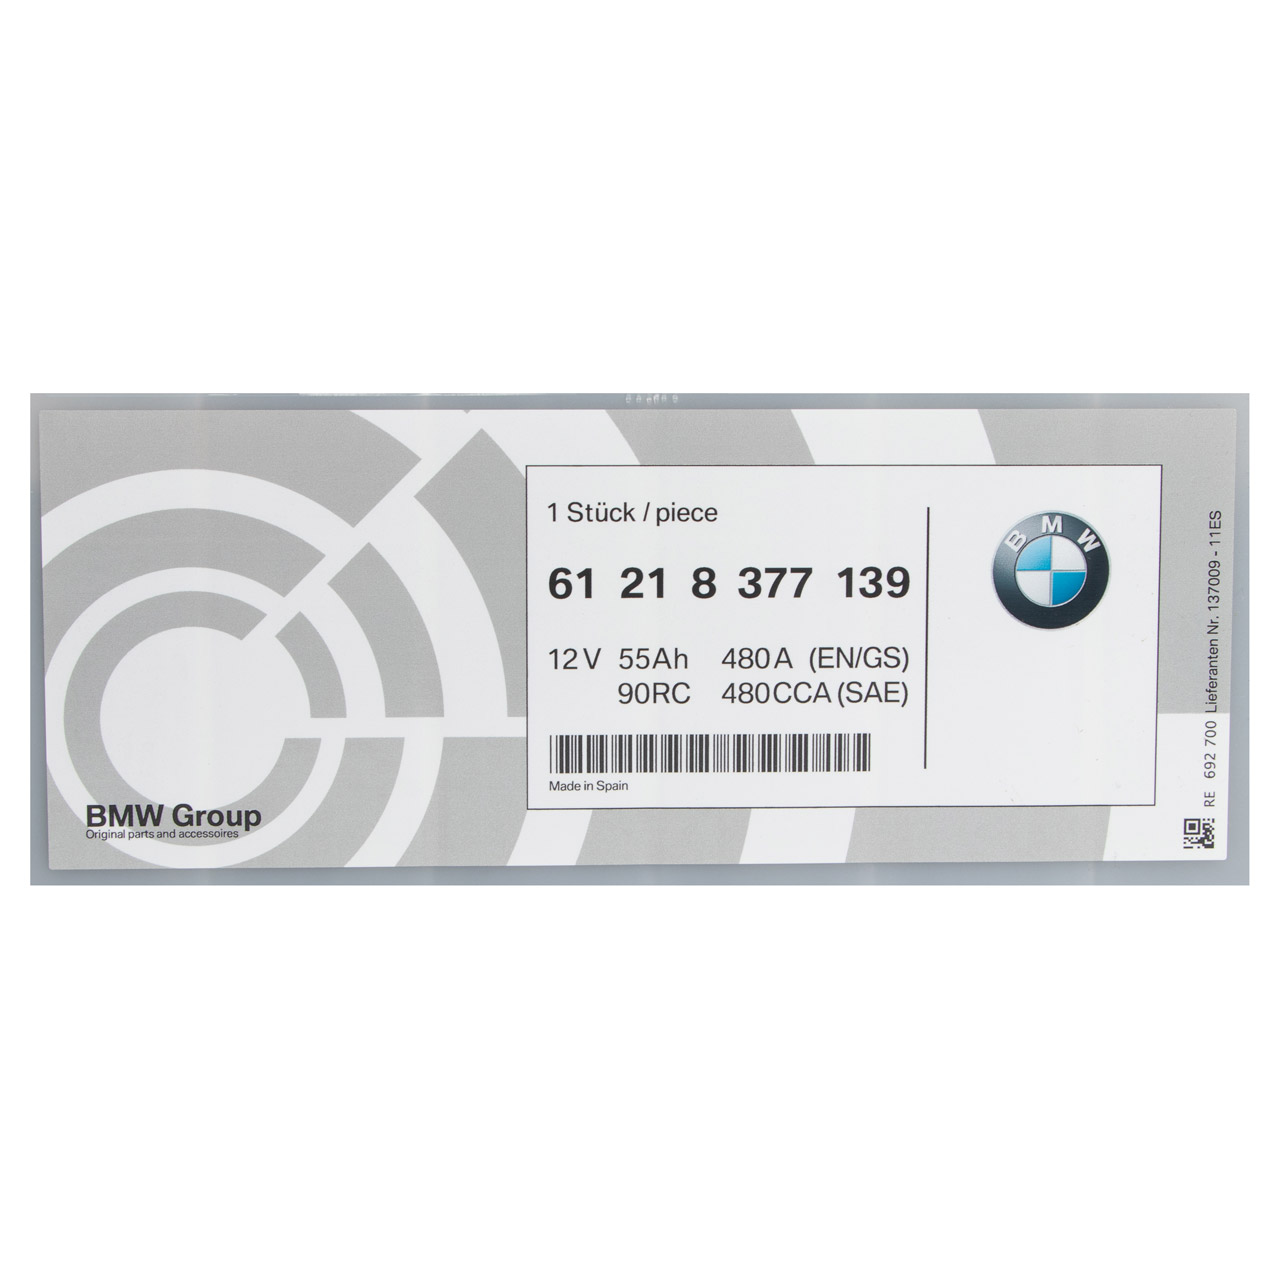 ORIGINAL BMW Autobatterie Batterie Starterbatterie 12V 55Ah 480A 61218377139